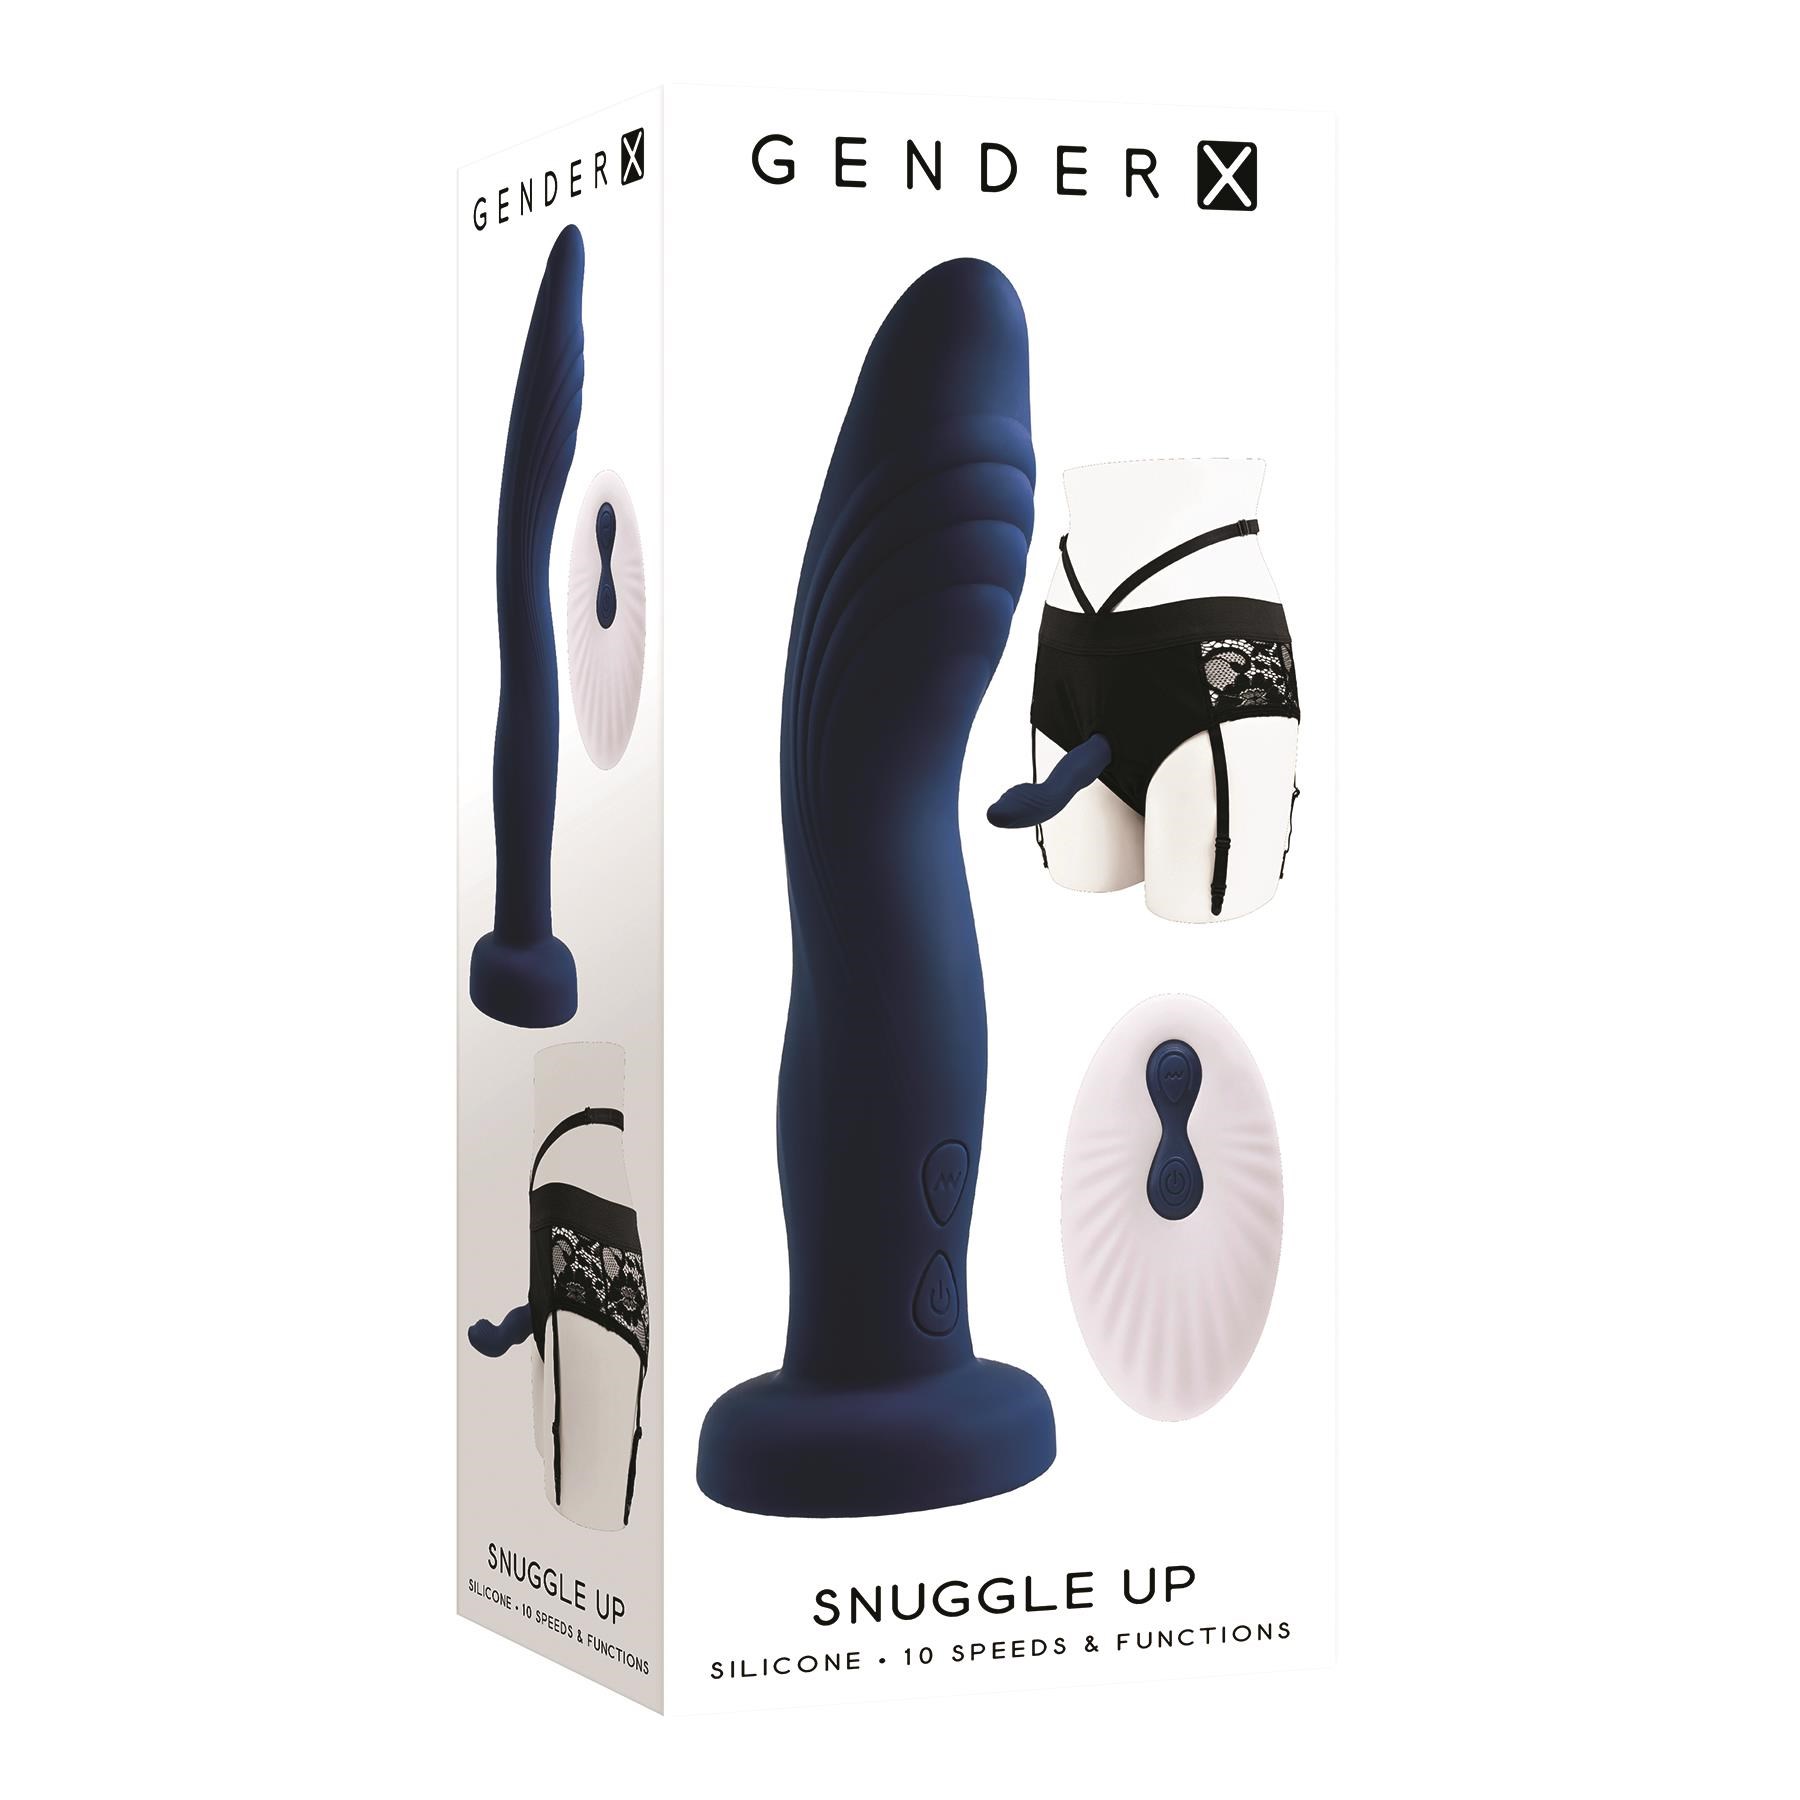 Gender X Snuggle Up Remote Control Dildo and Harness Set - Box Shot